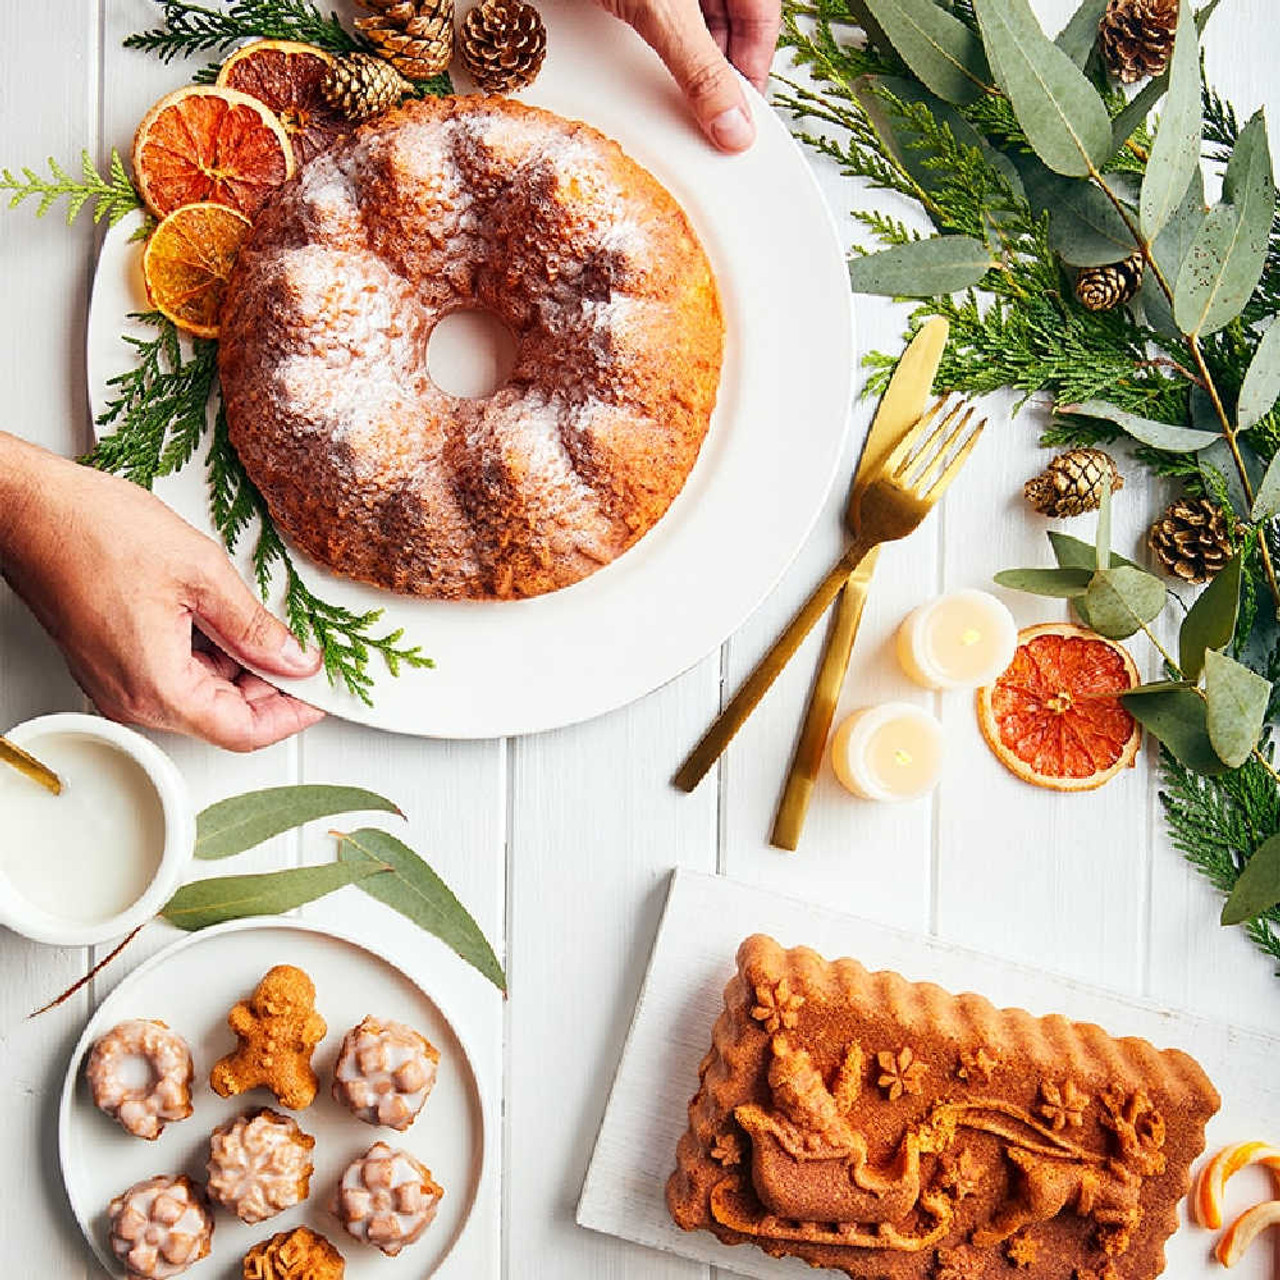 Nordic Ware Holiday Teacakes Pan